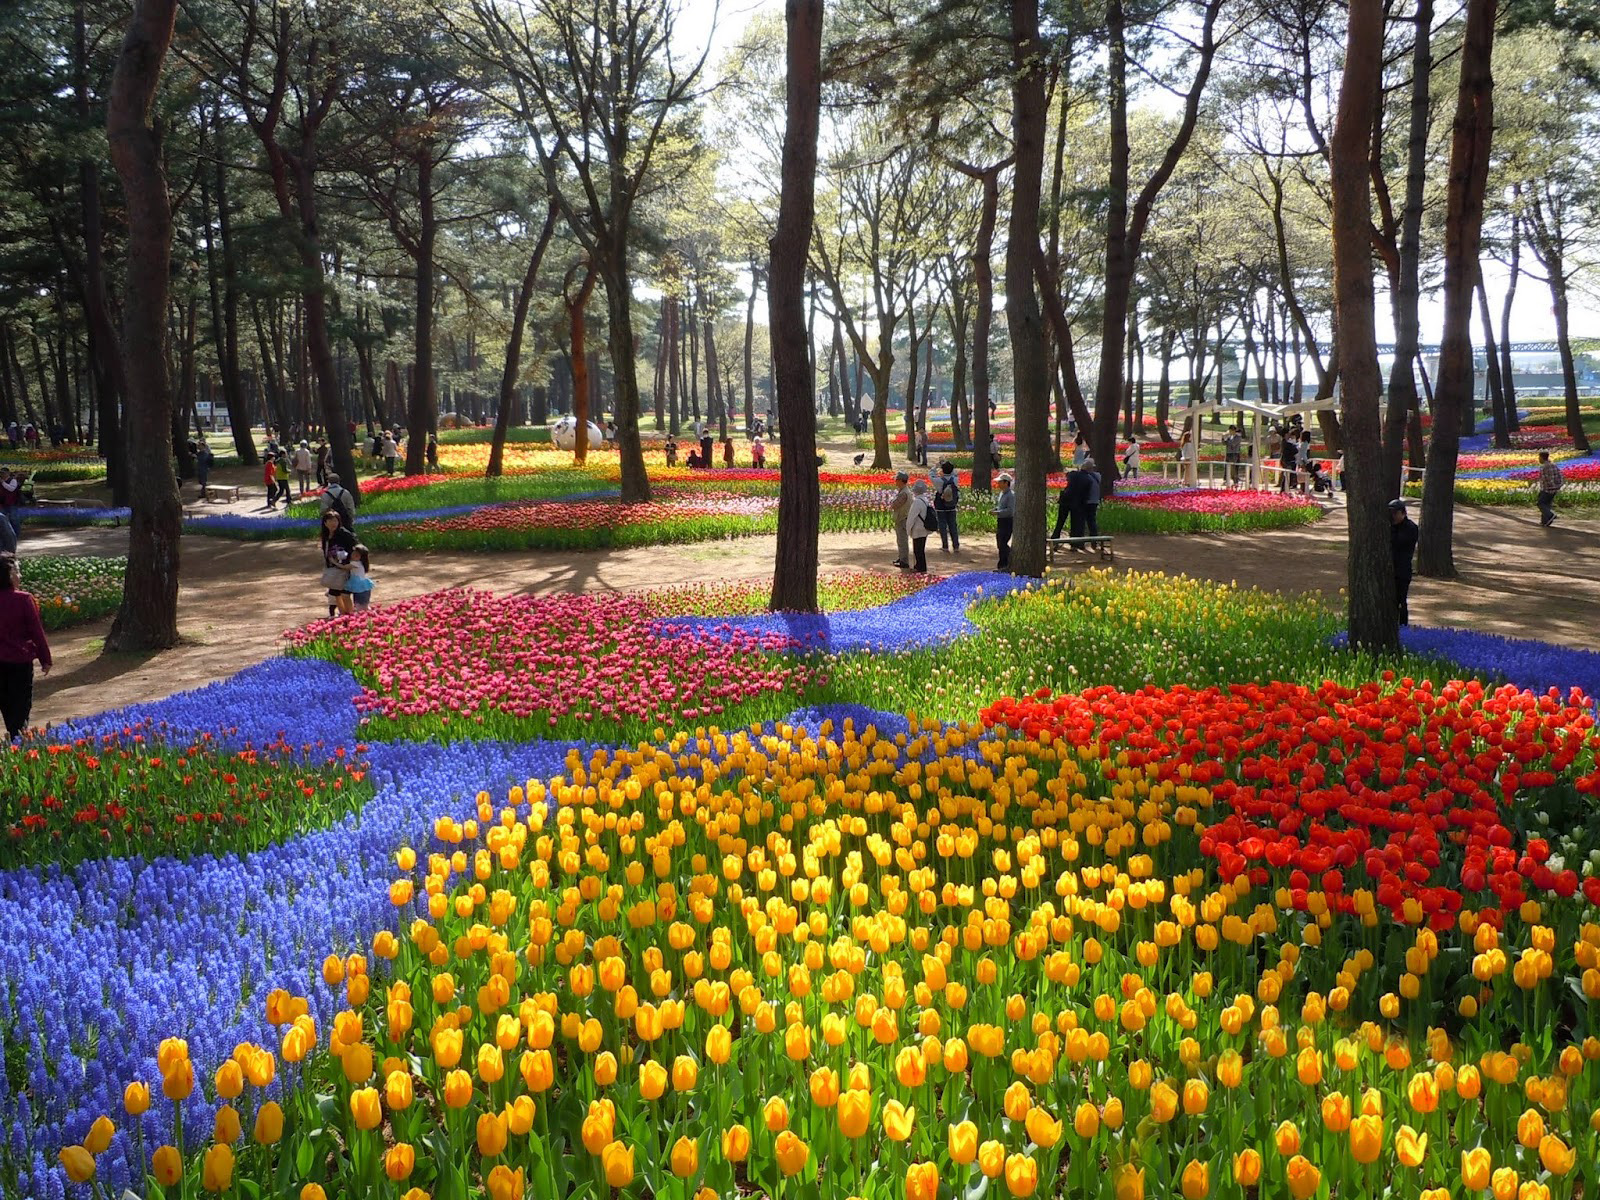 https://hiddener.files.wordpress.com/2012/06/hitachi-seaside-park-tulips-02.jpg